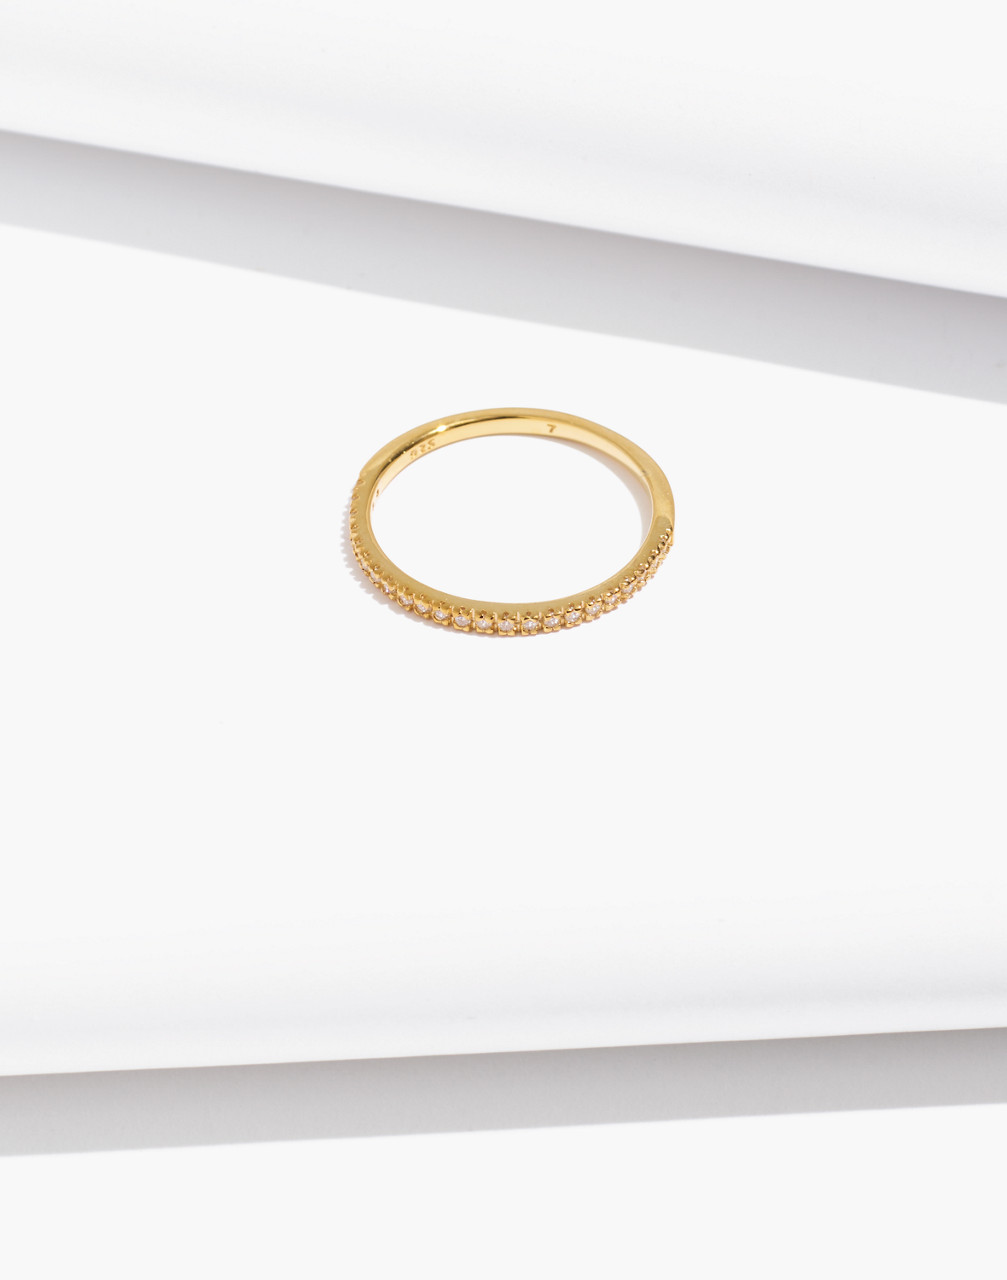 Mw Delicate Collection Demi-fine White Topaz Ring In 14k Gold